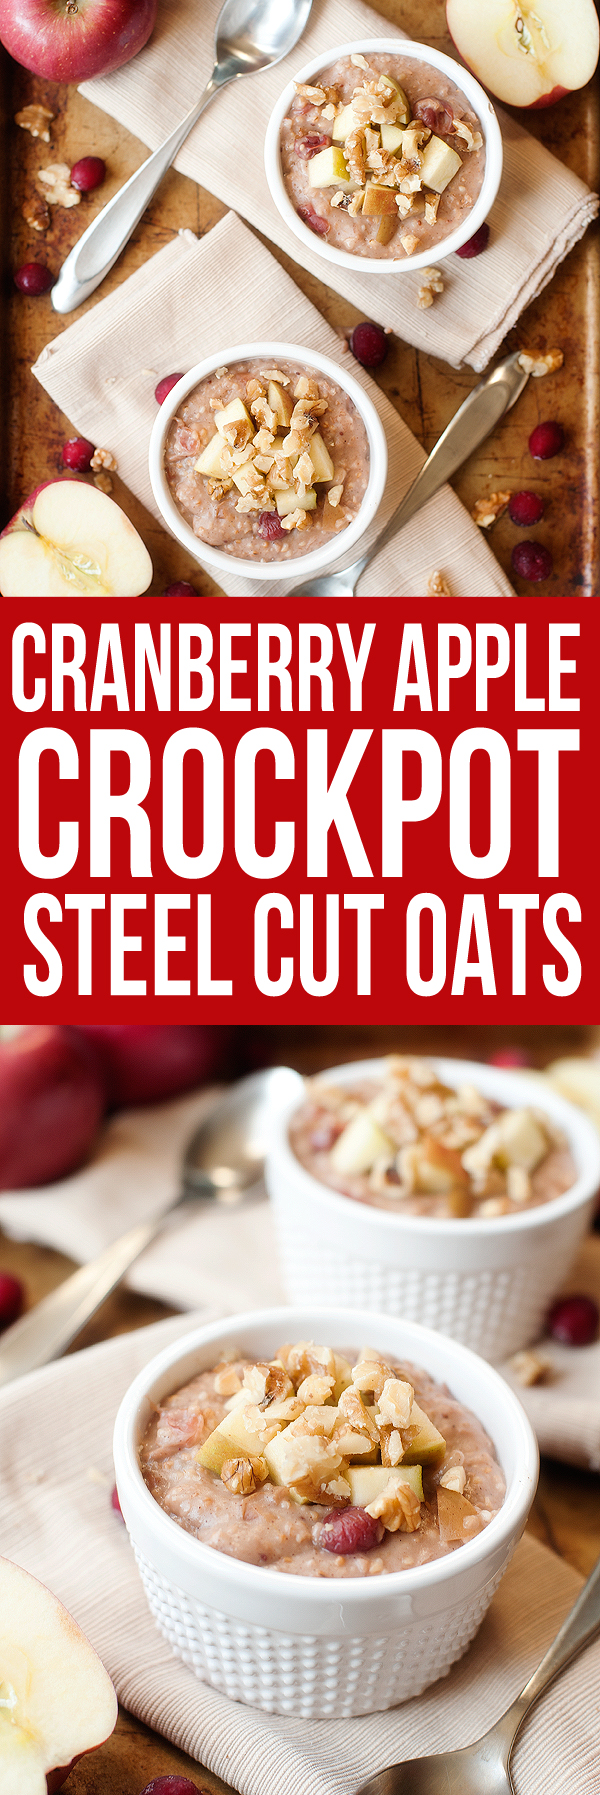 Cranberry Apple Crockpot Steel Cut Oats